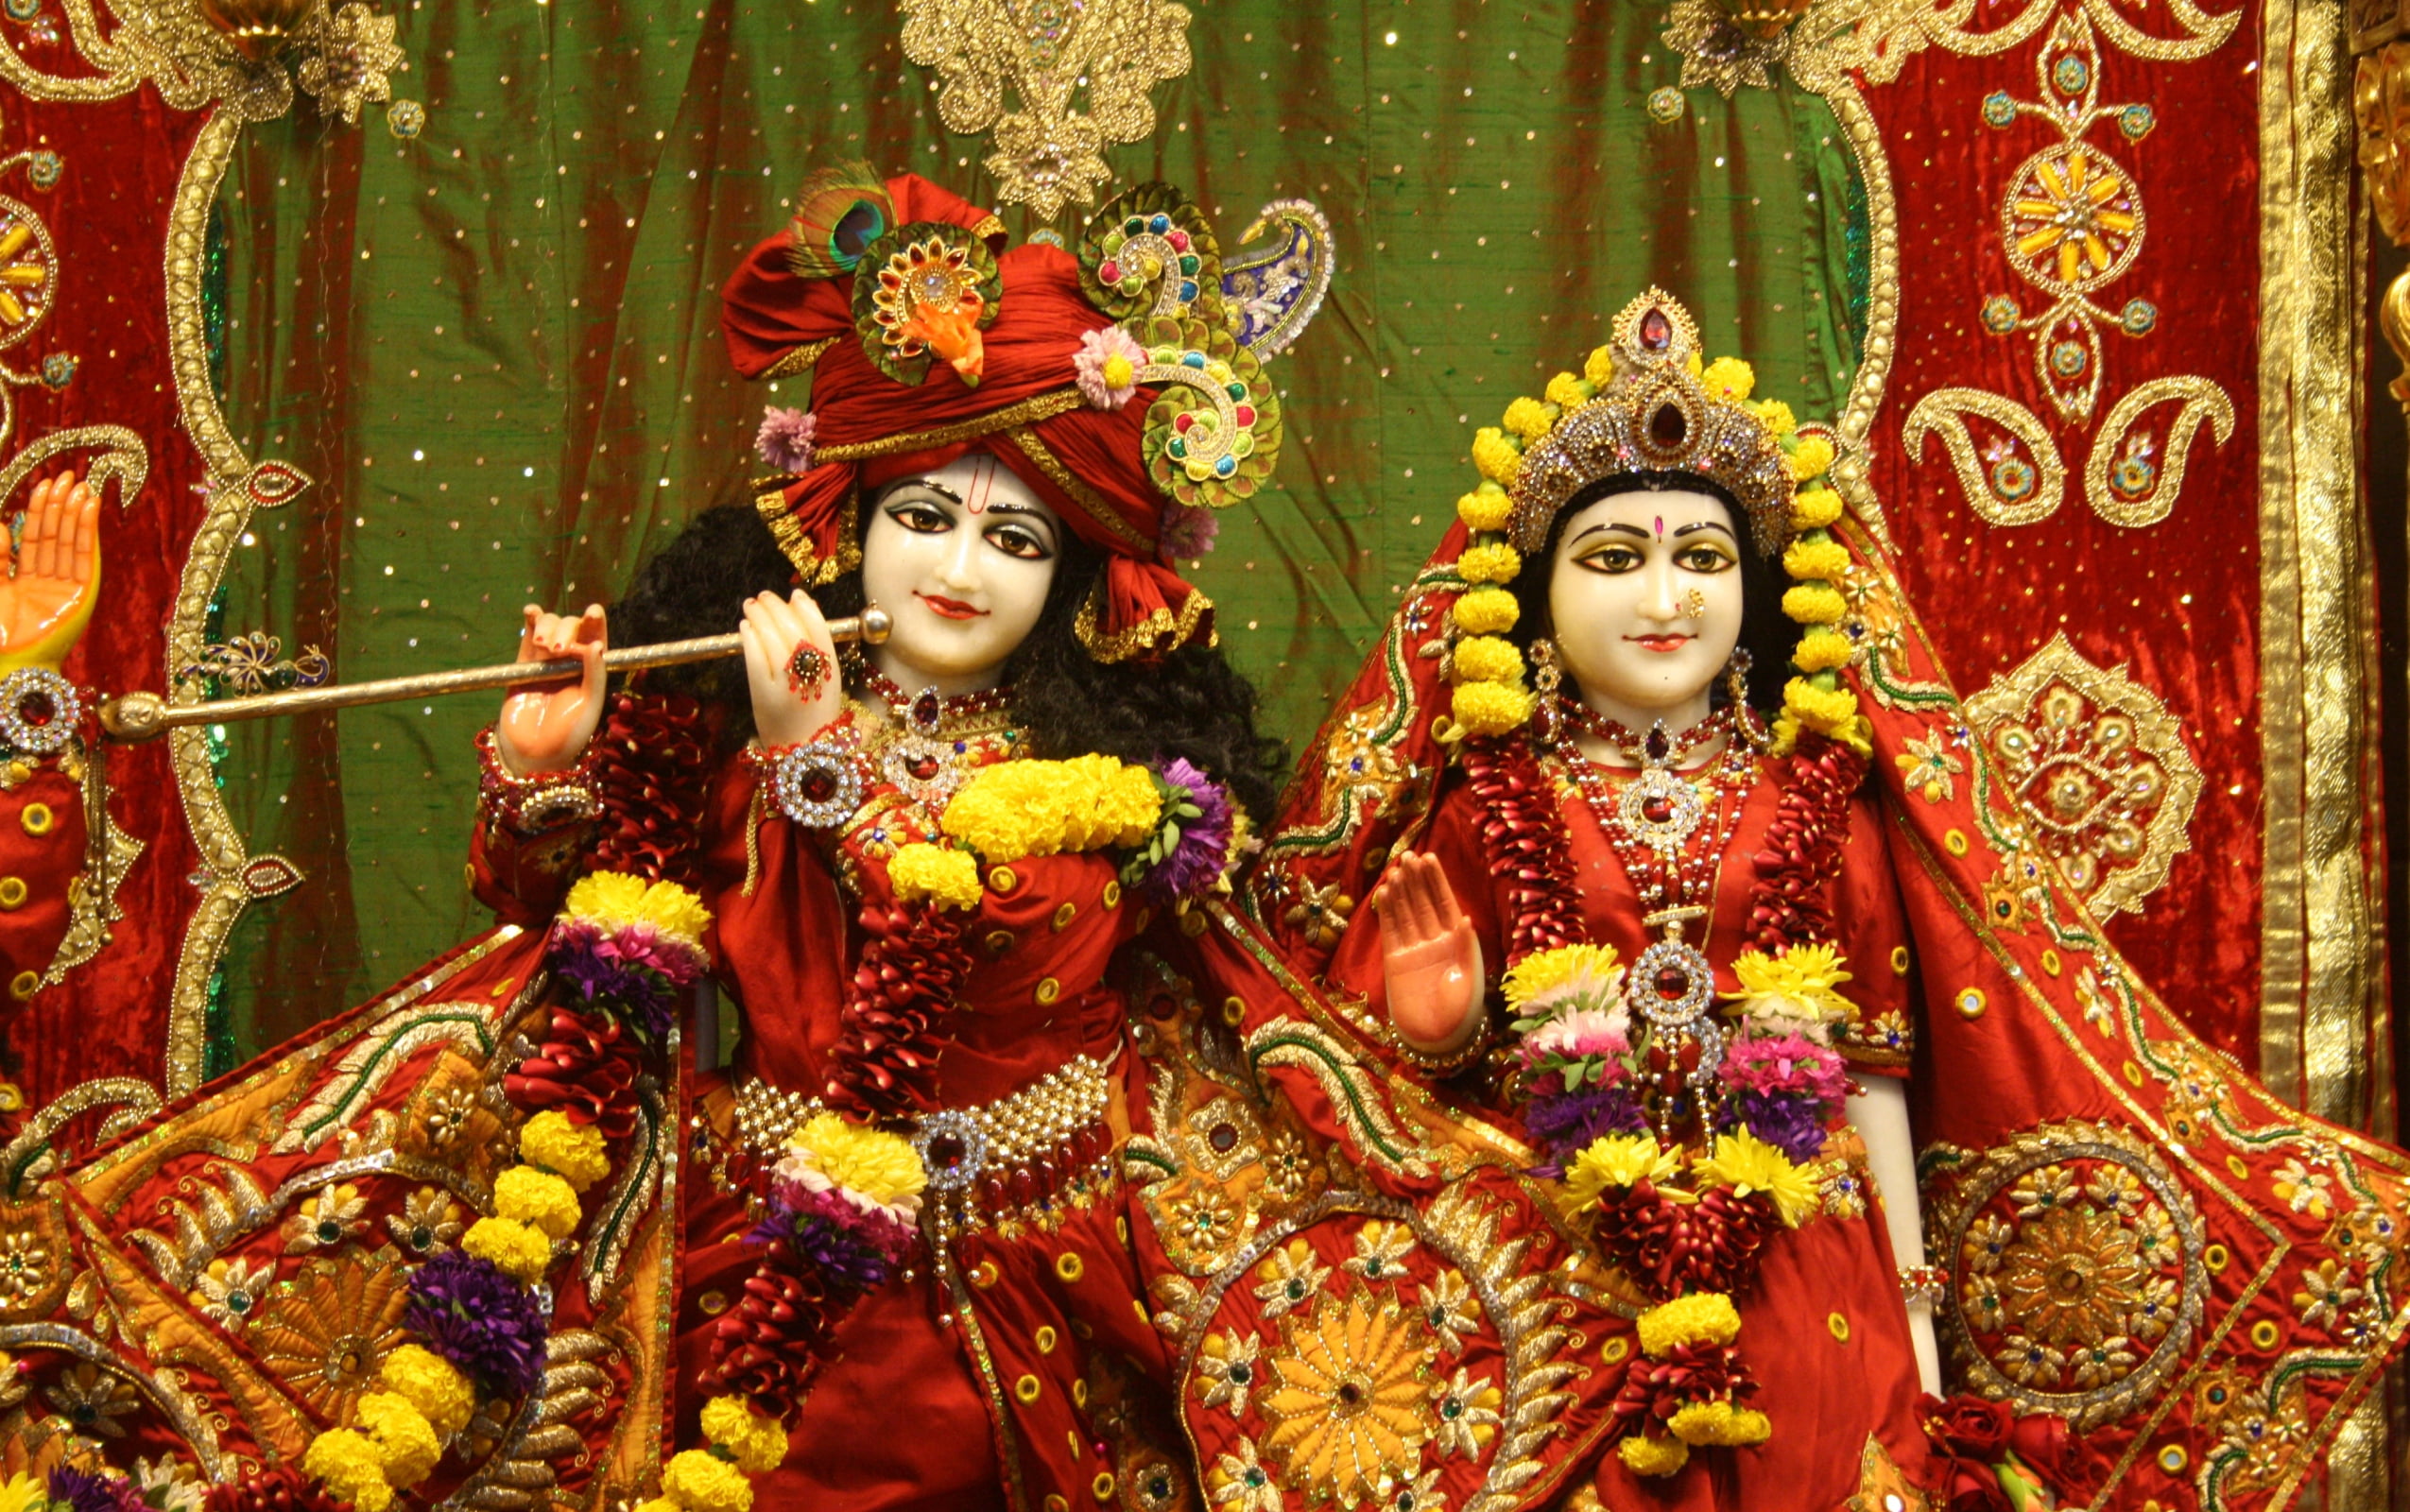 The Lord Krishna Temples Iskcon, Krishna and Radha figurines